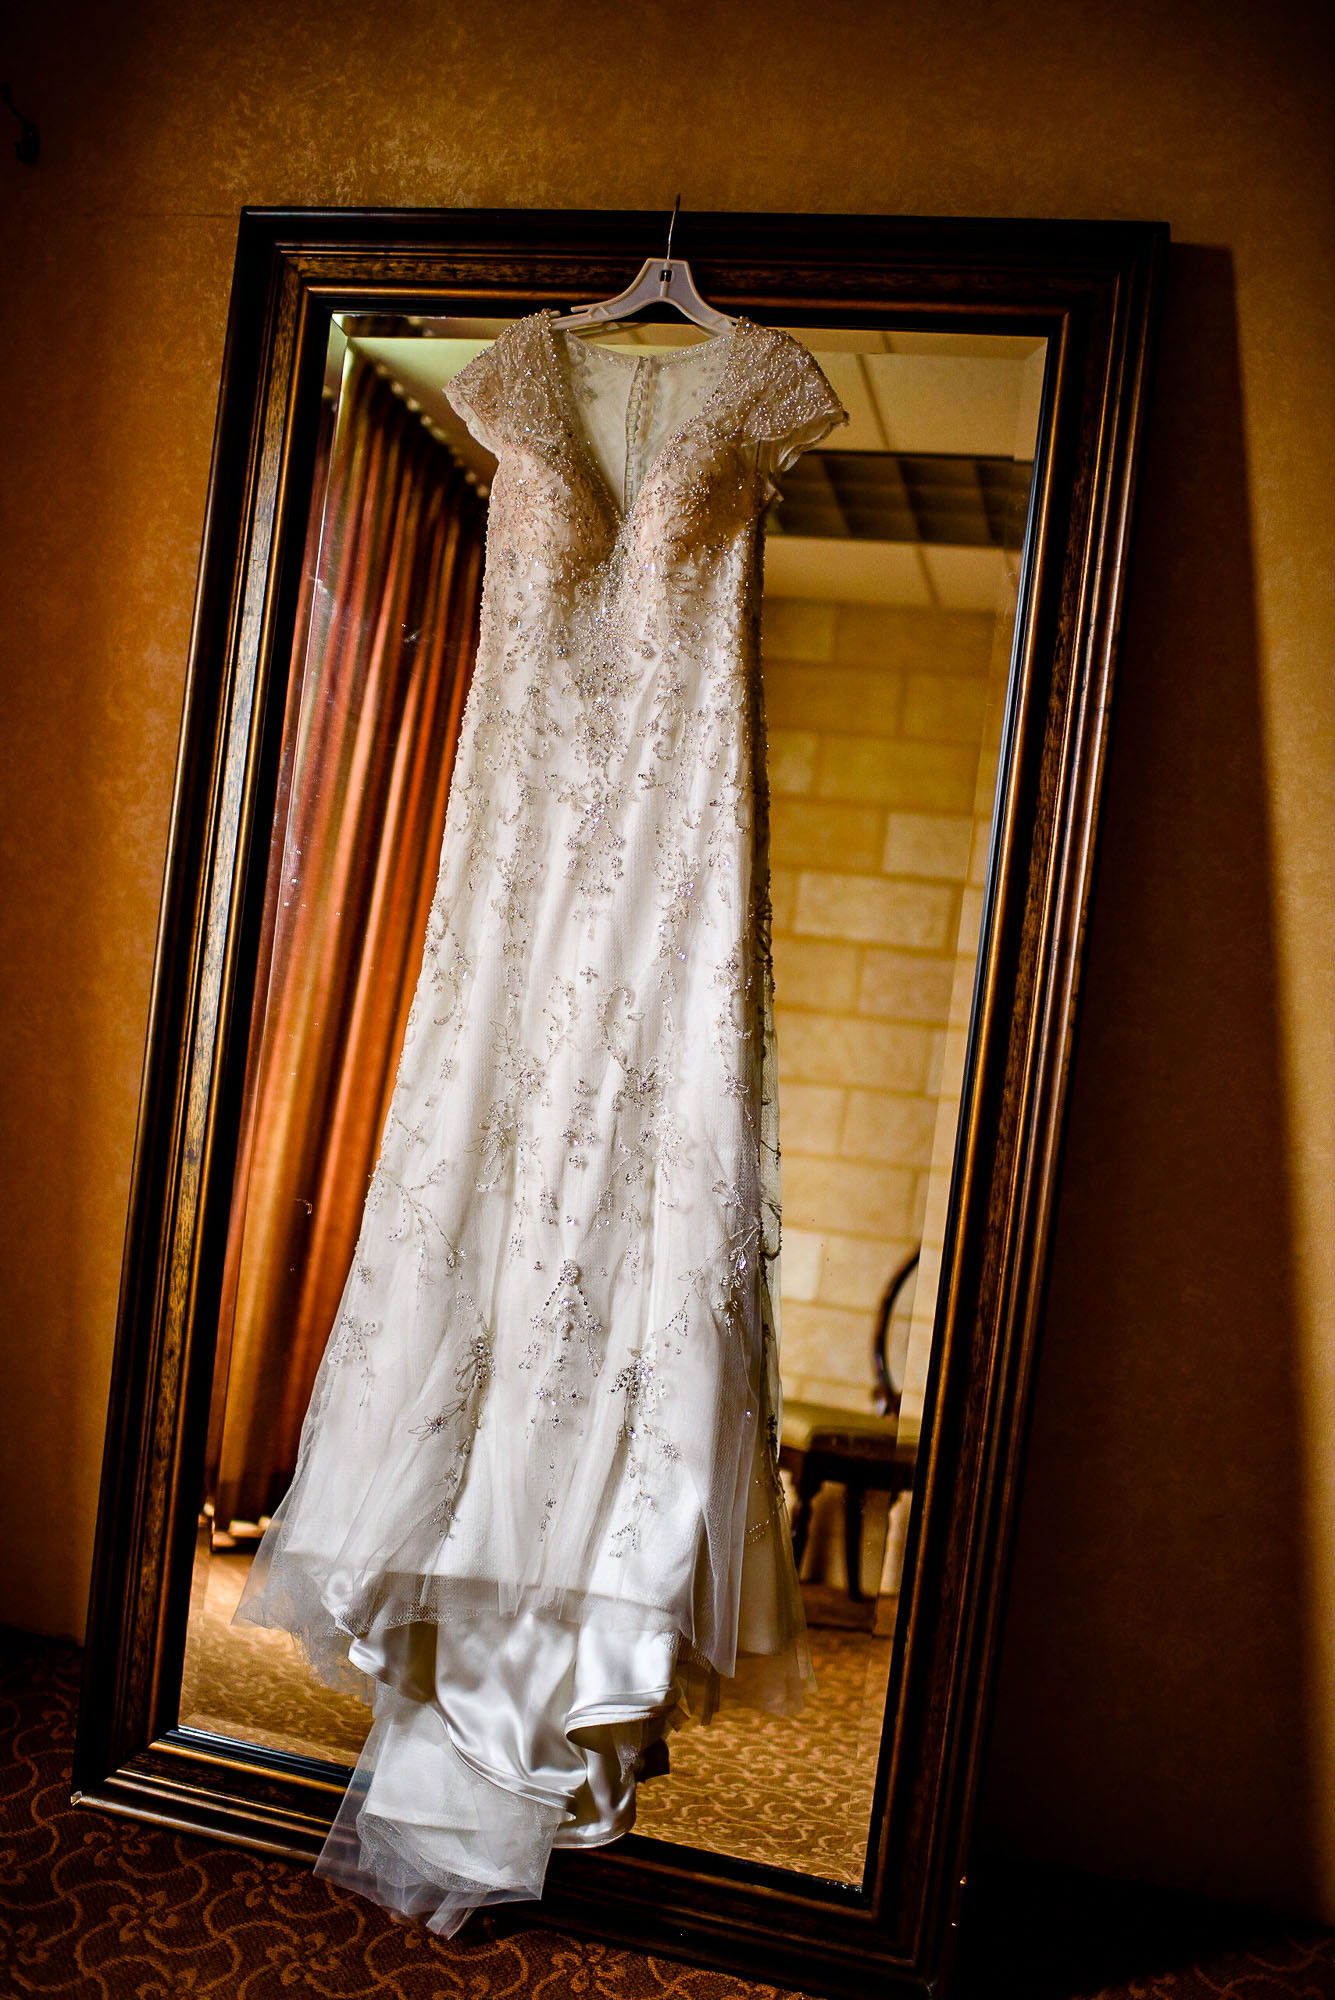 The Sephardic Temple wedding dress